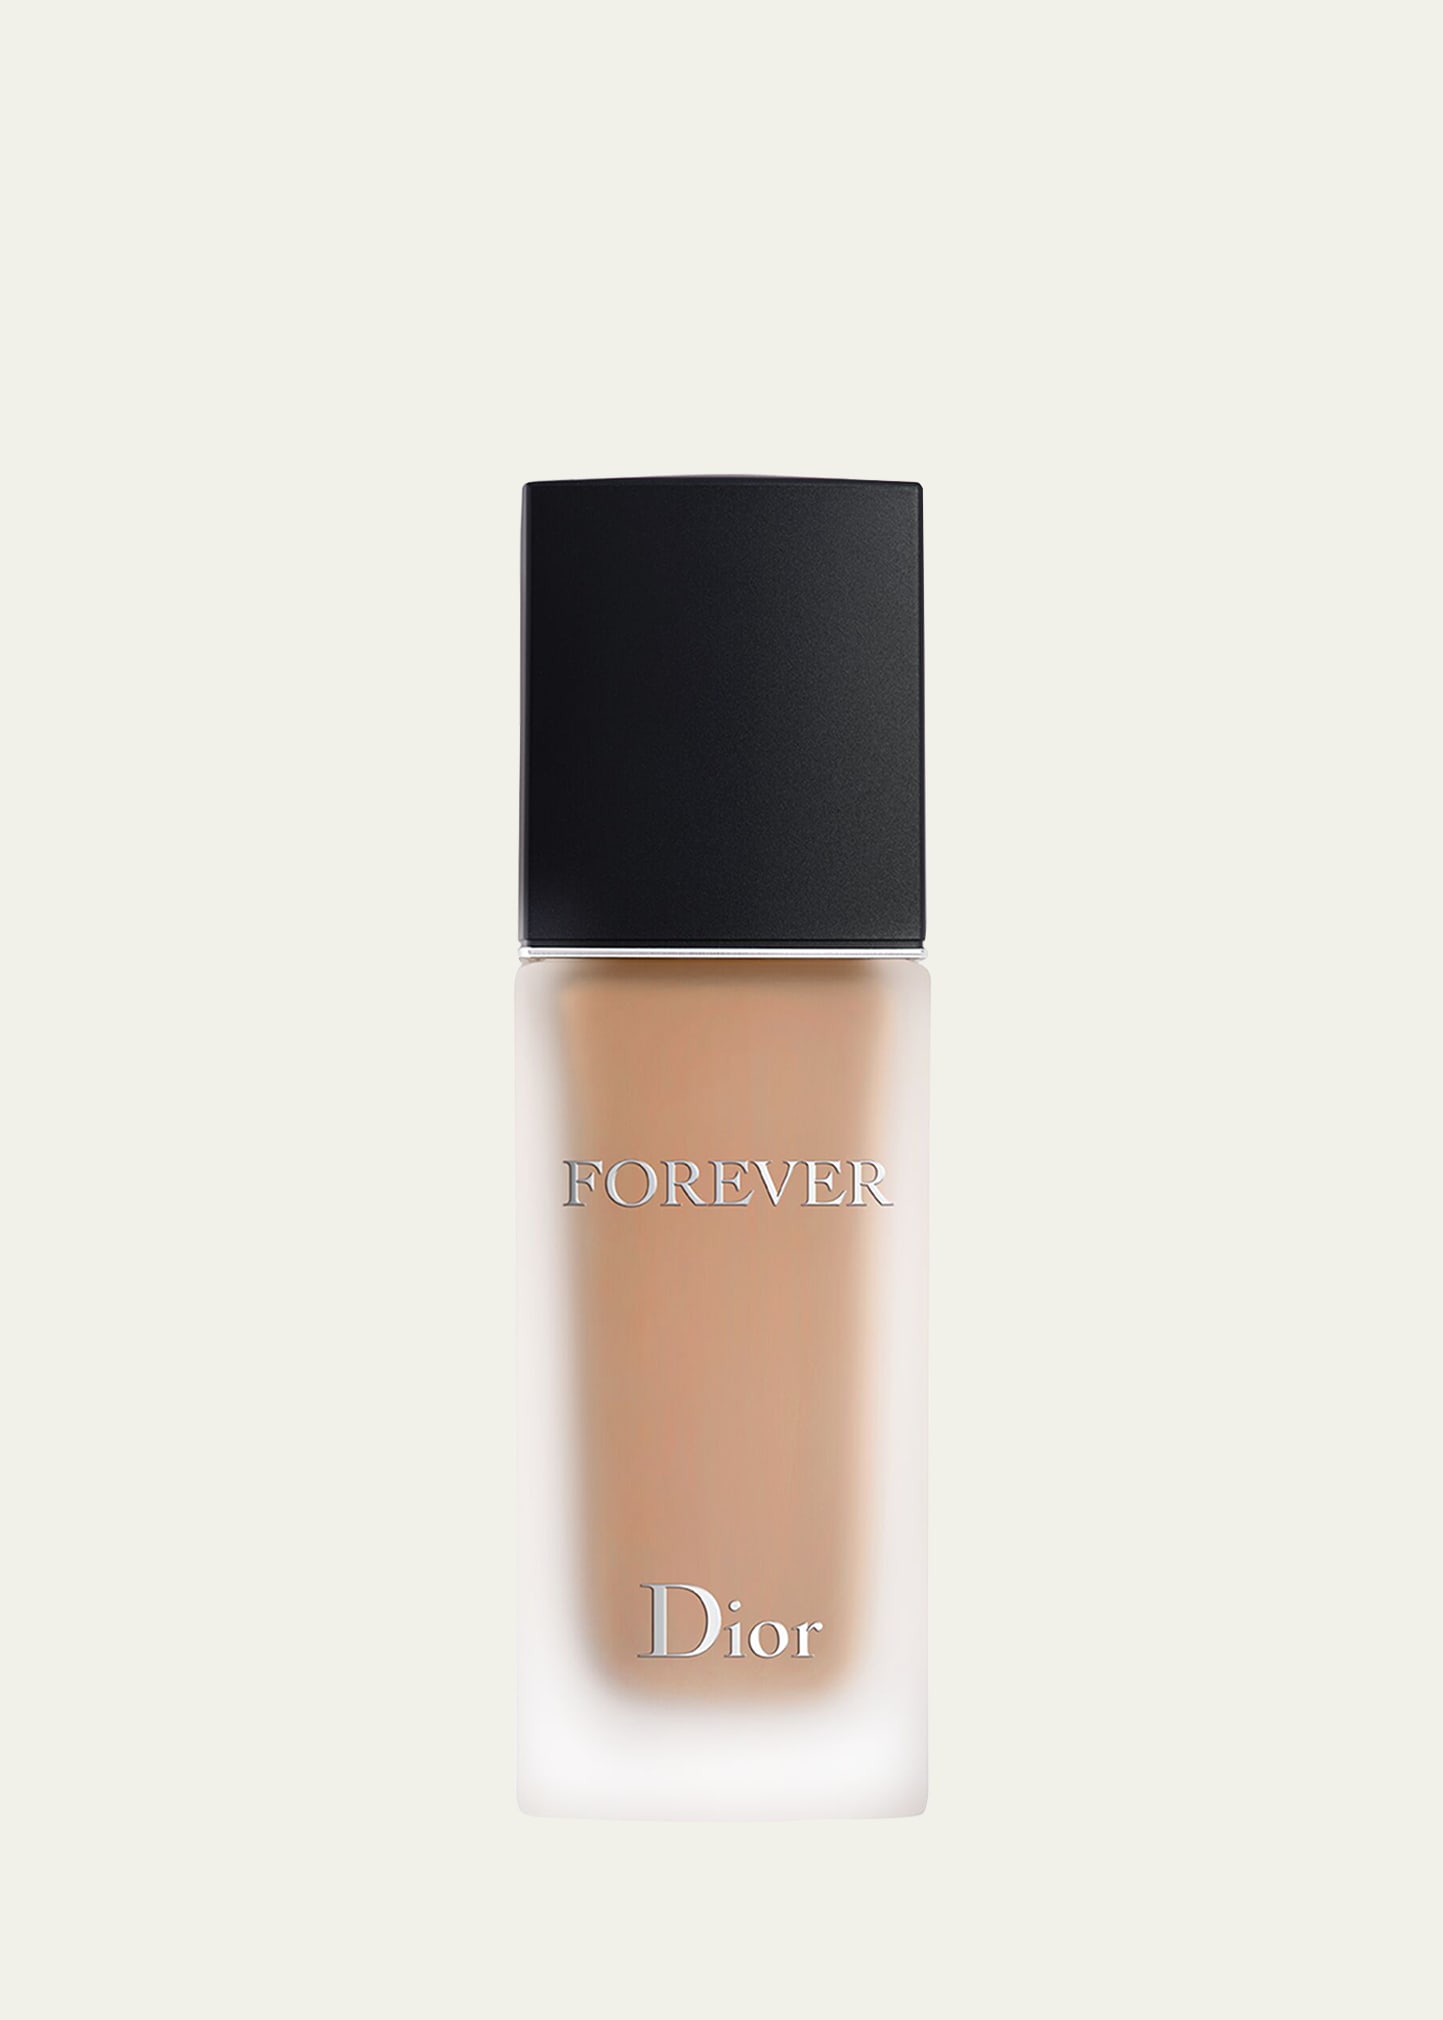 Dior 1 Oz. Forever Matte Skincare Foundation Spf 15 In 4 Neutral